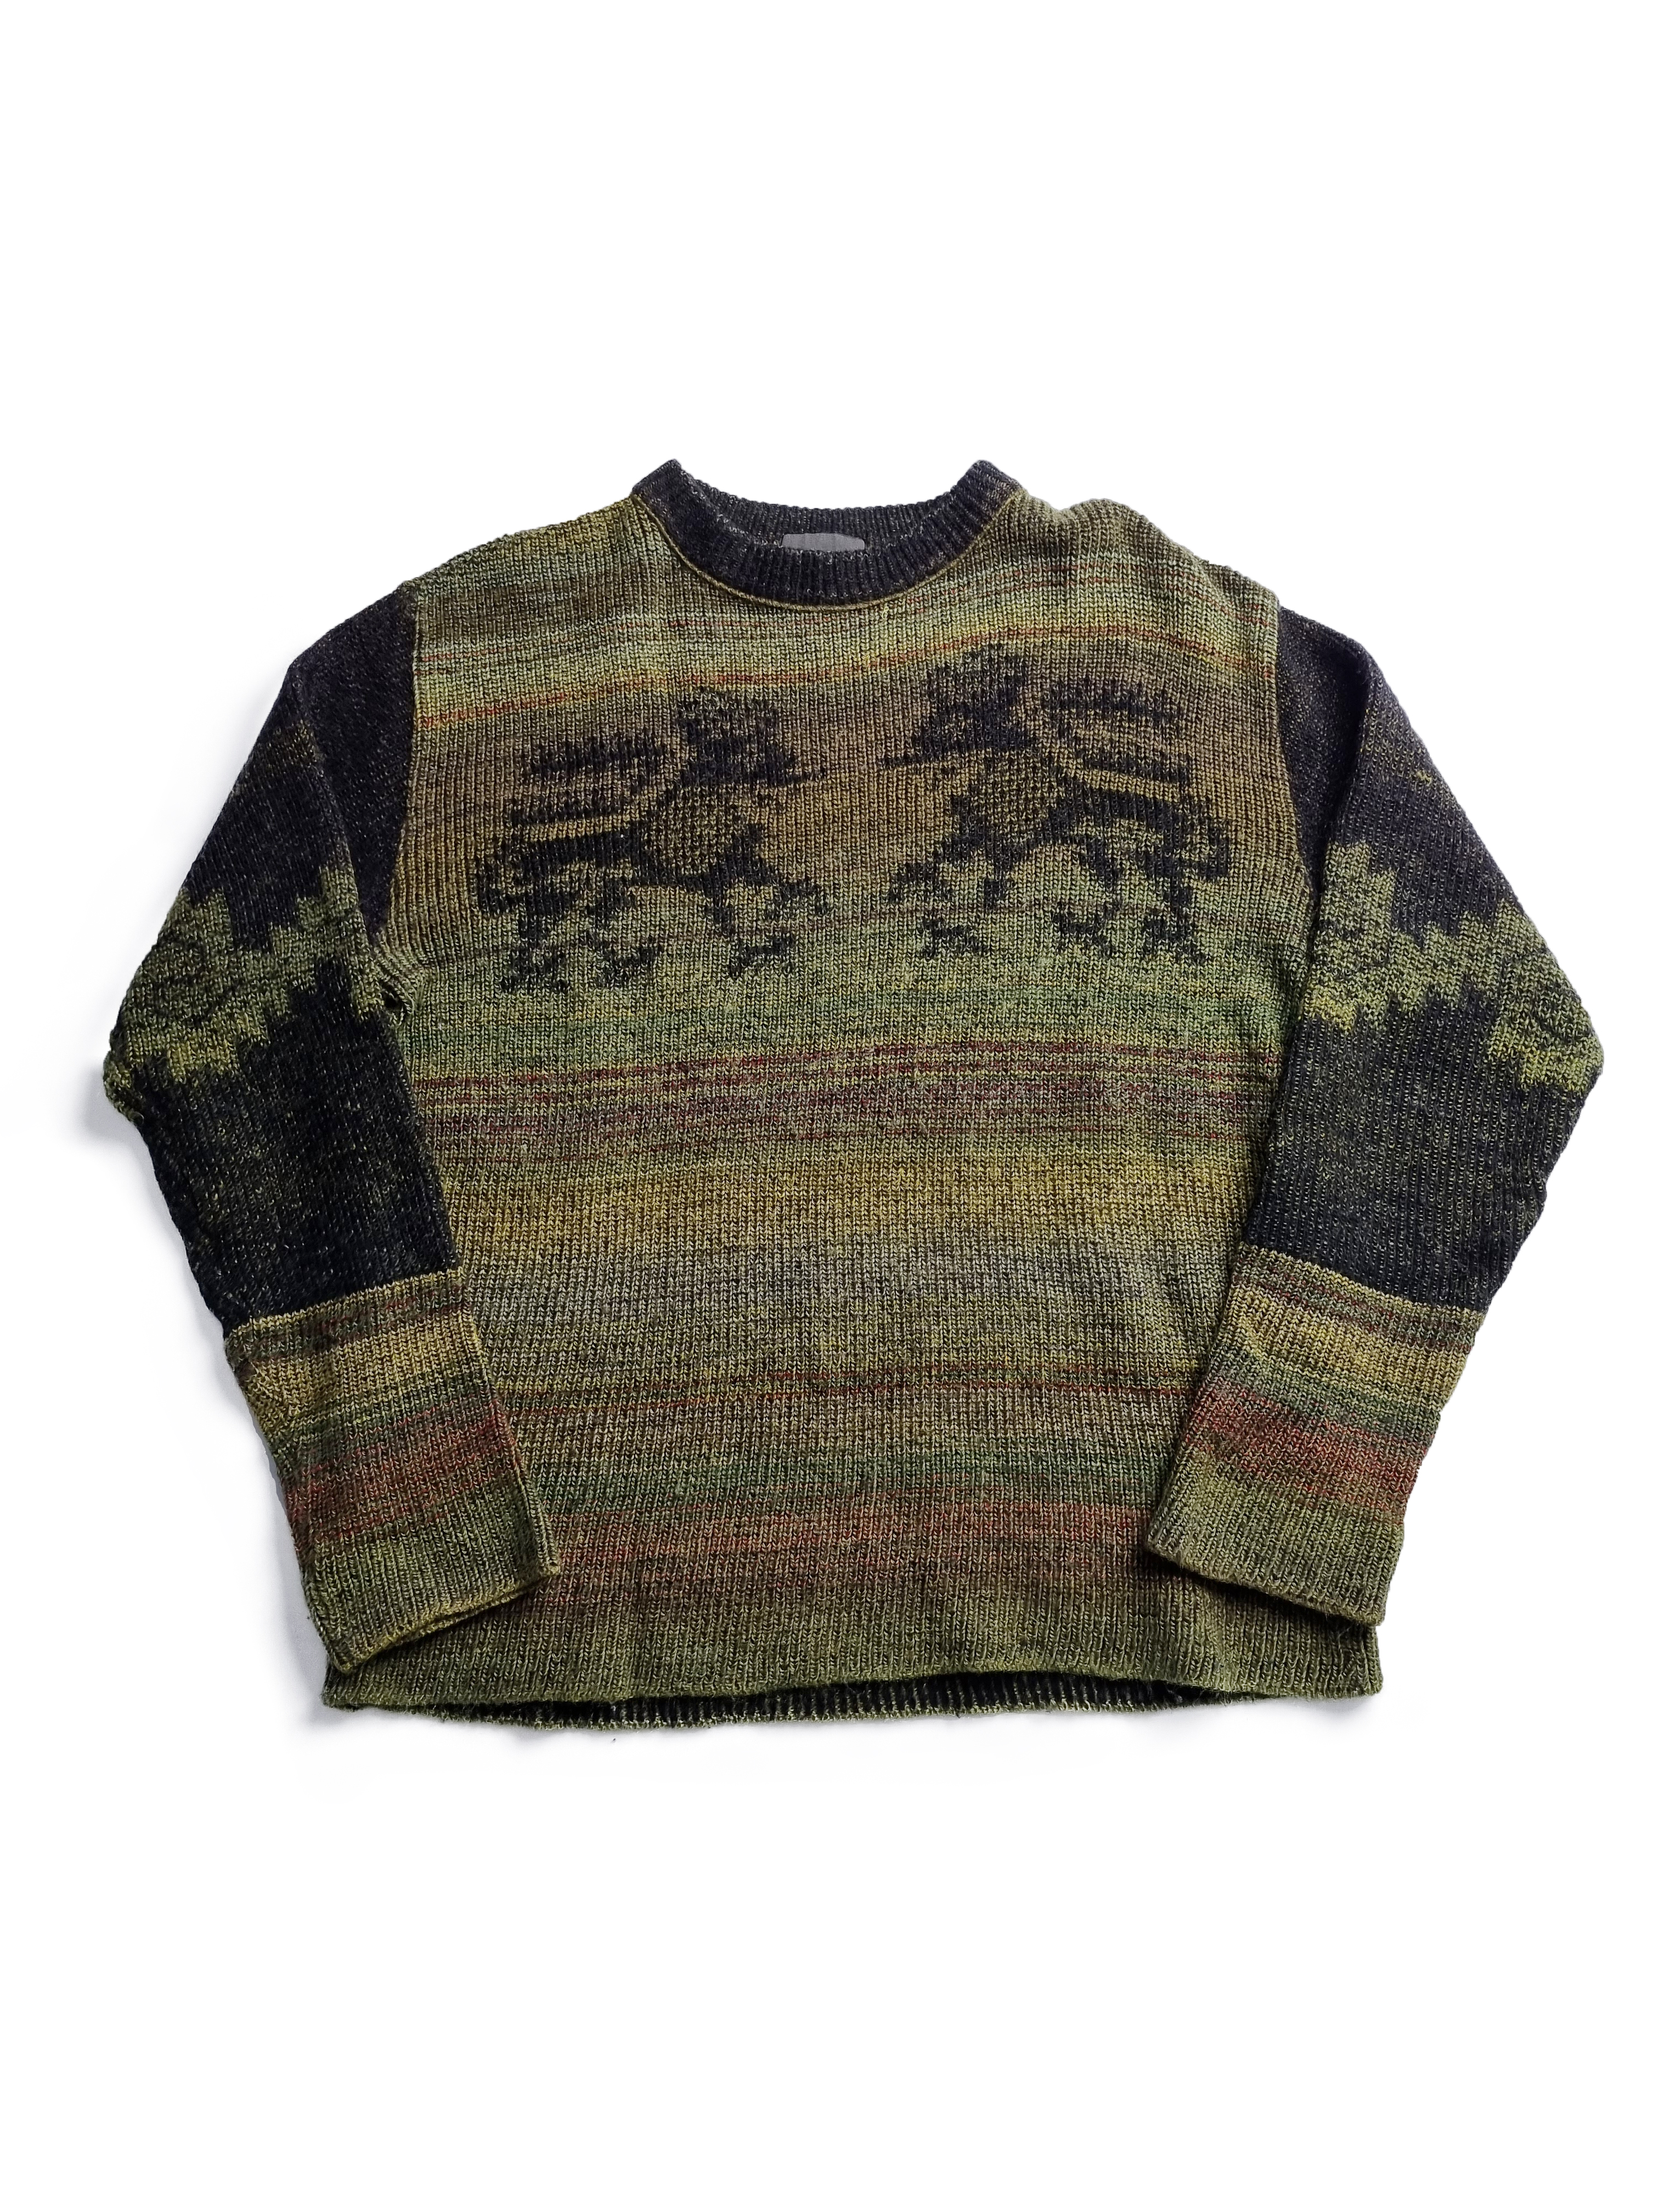 FICCE by yoshiyuki konishi sweater